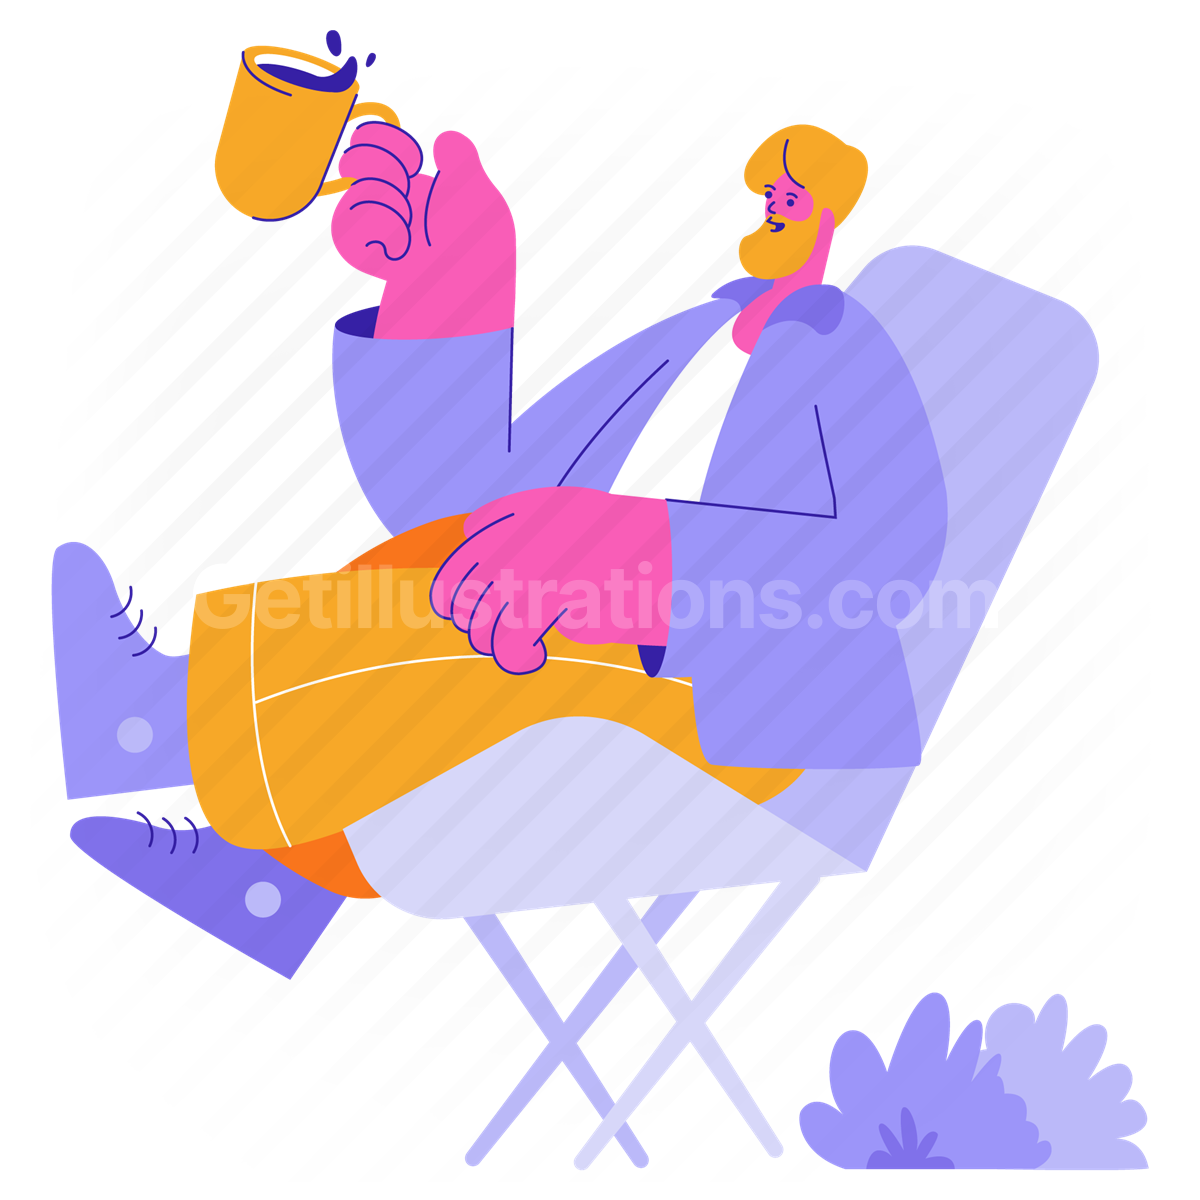 Lifestyle and Leisure  illustration